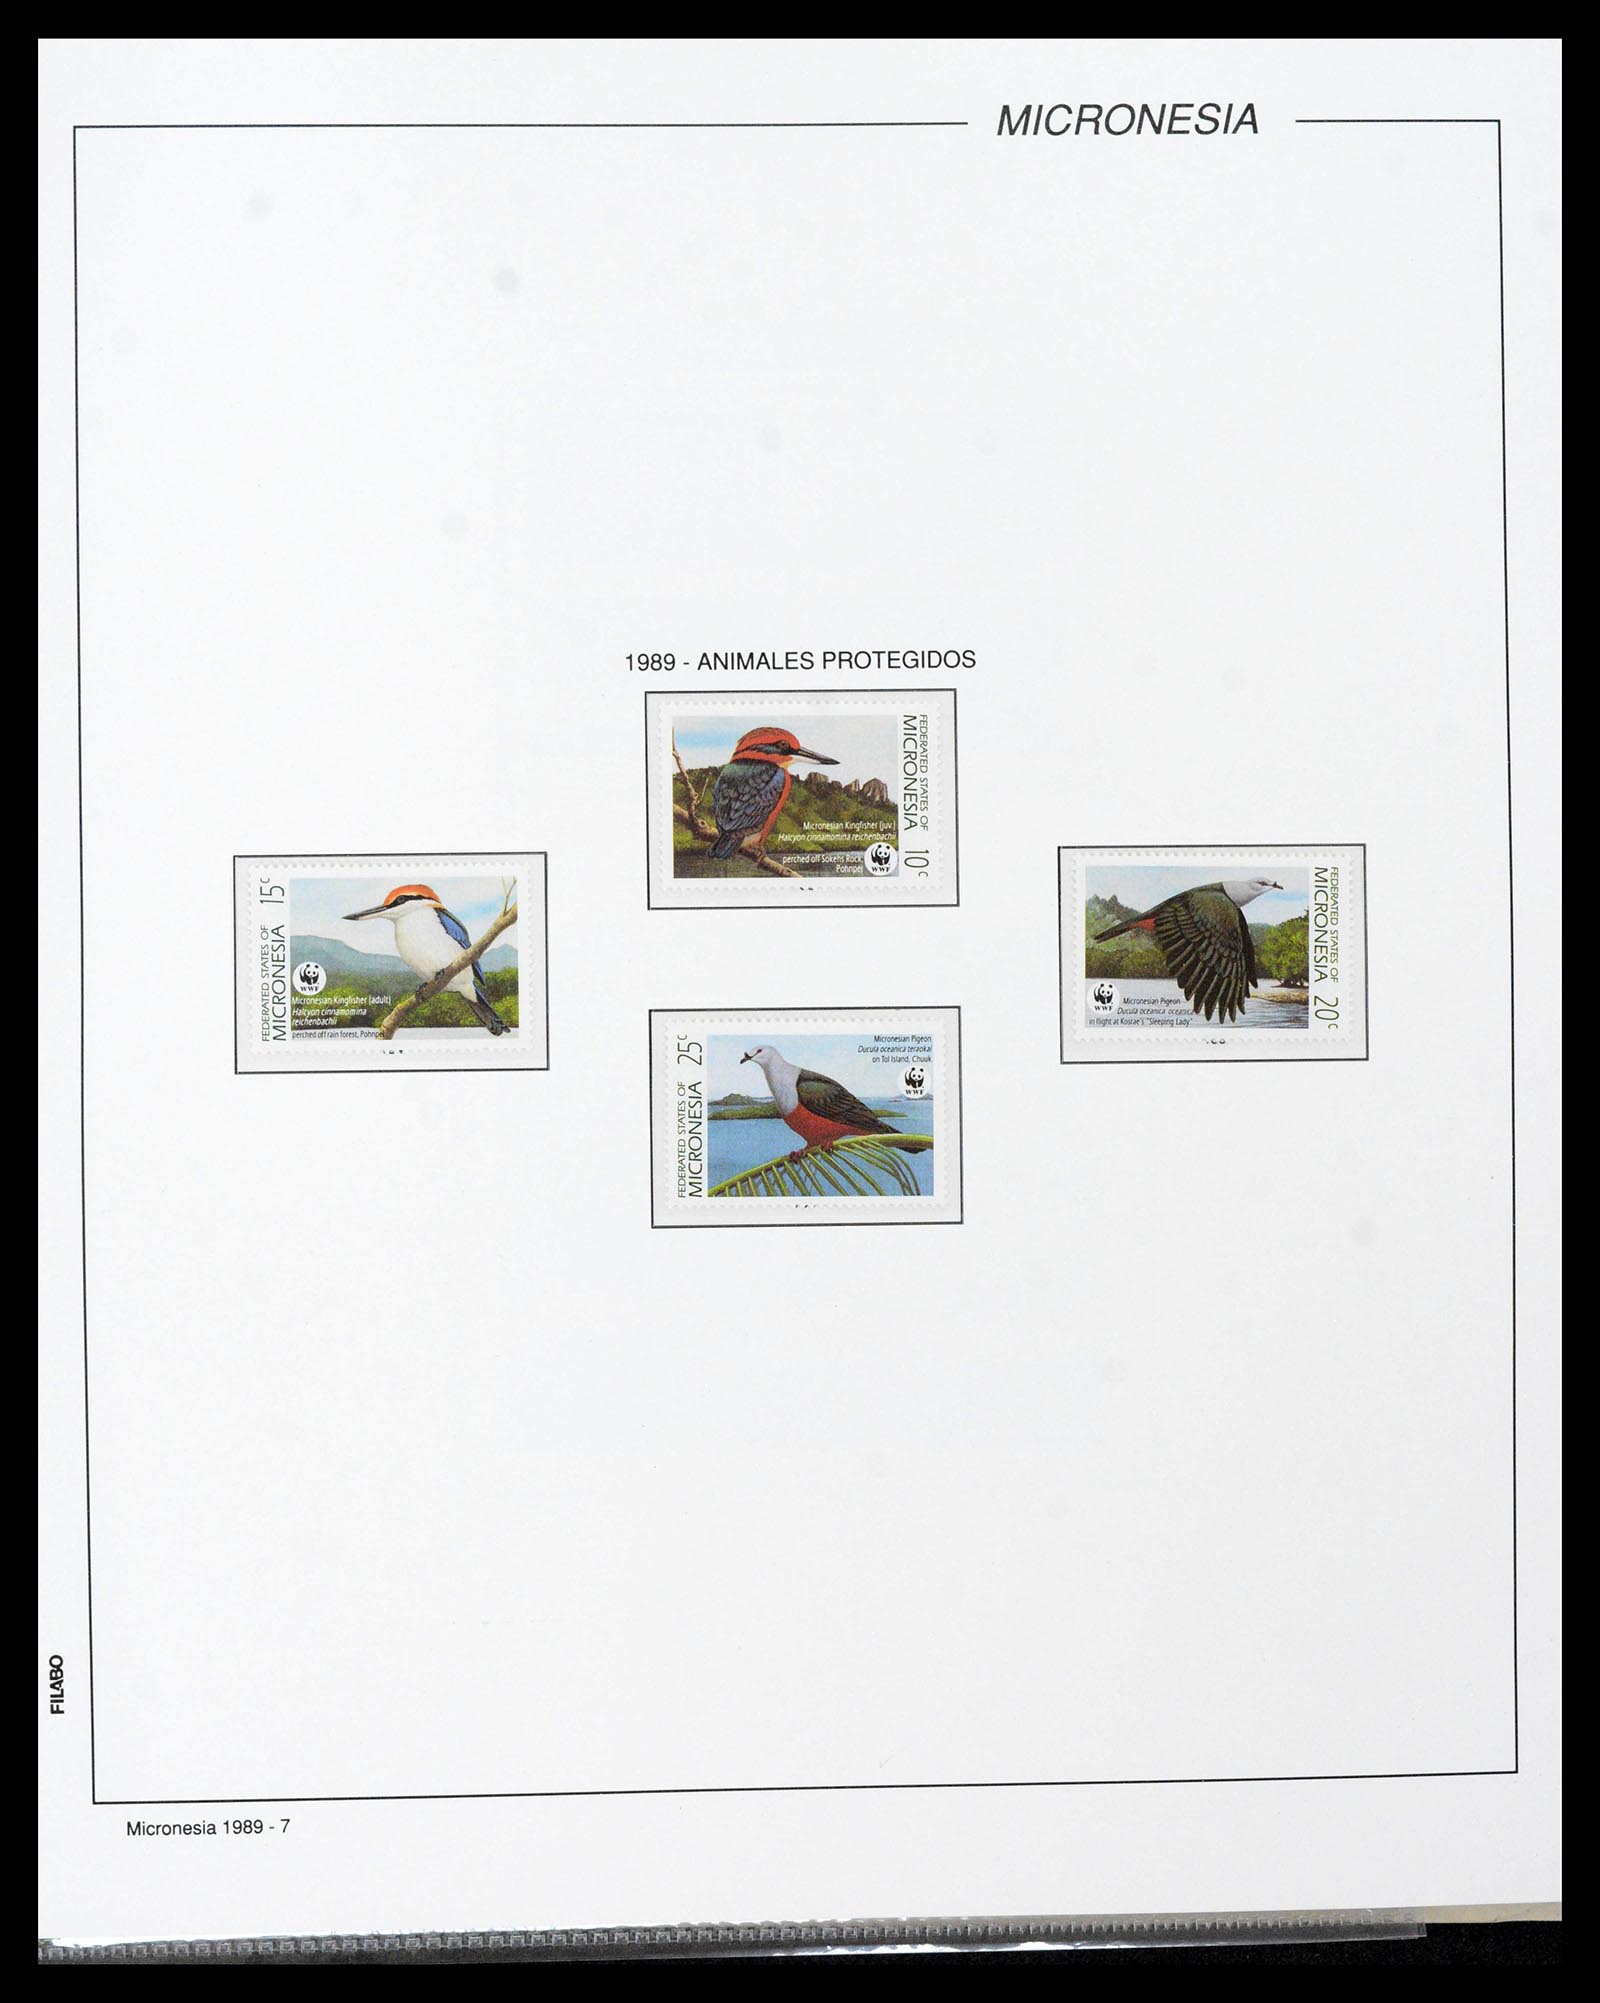 39222 0084 - Stamp collection 39222 Palau, Micronesia and Marshall islands 1980-1995.